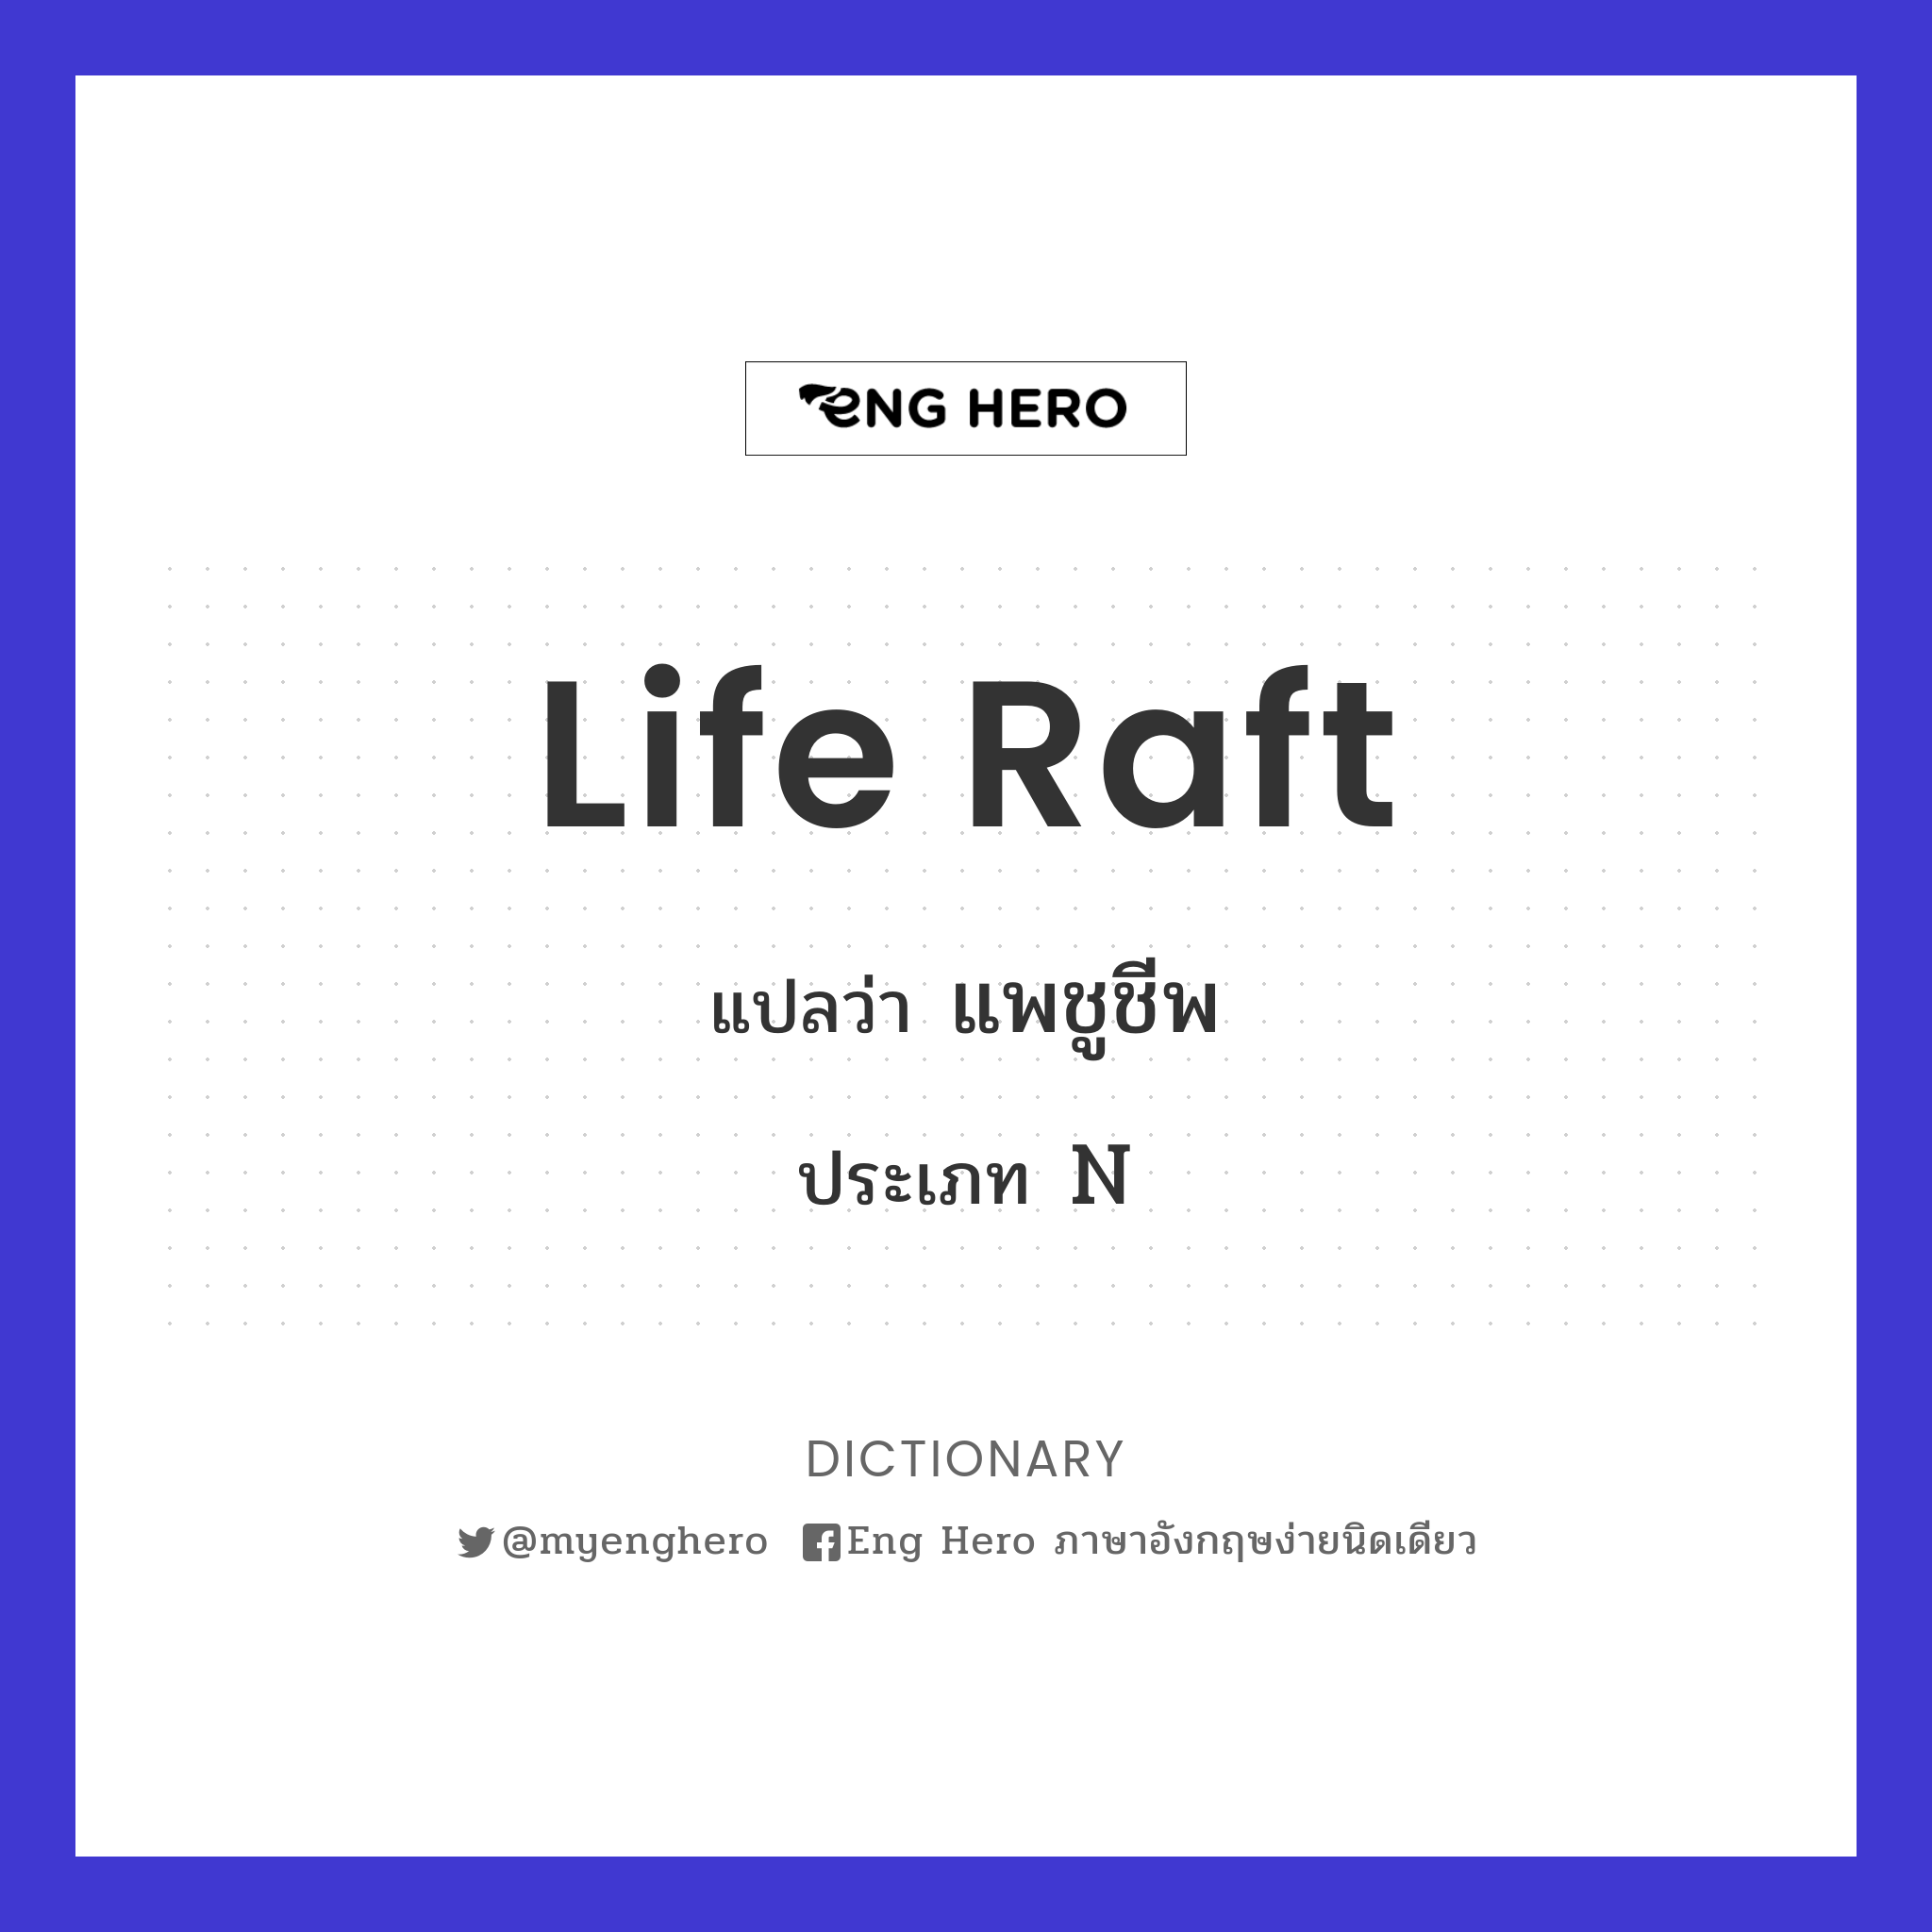 life raft